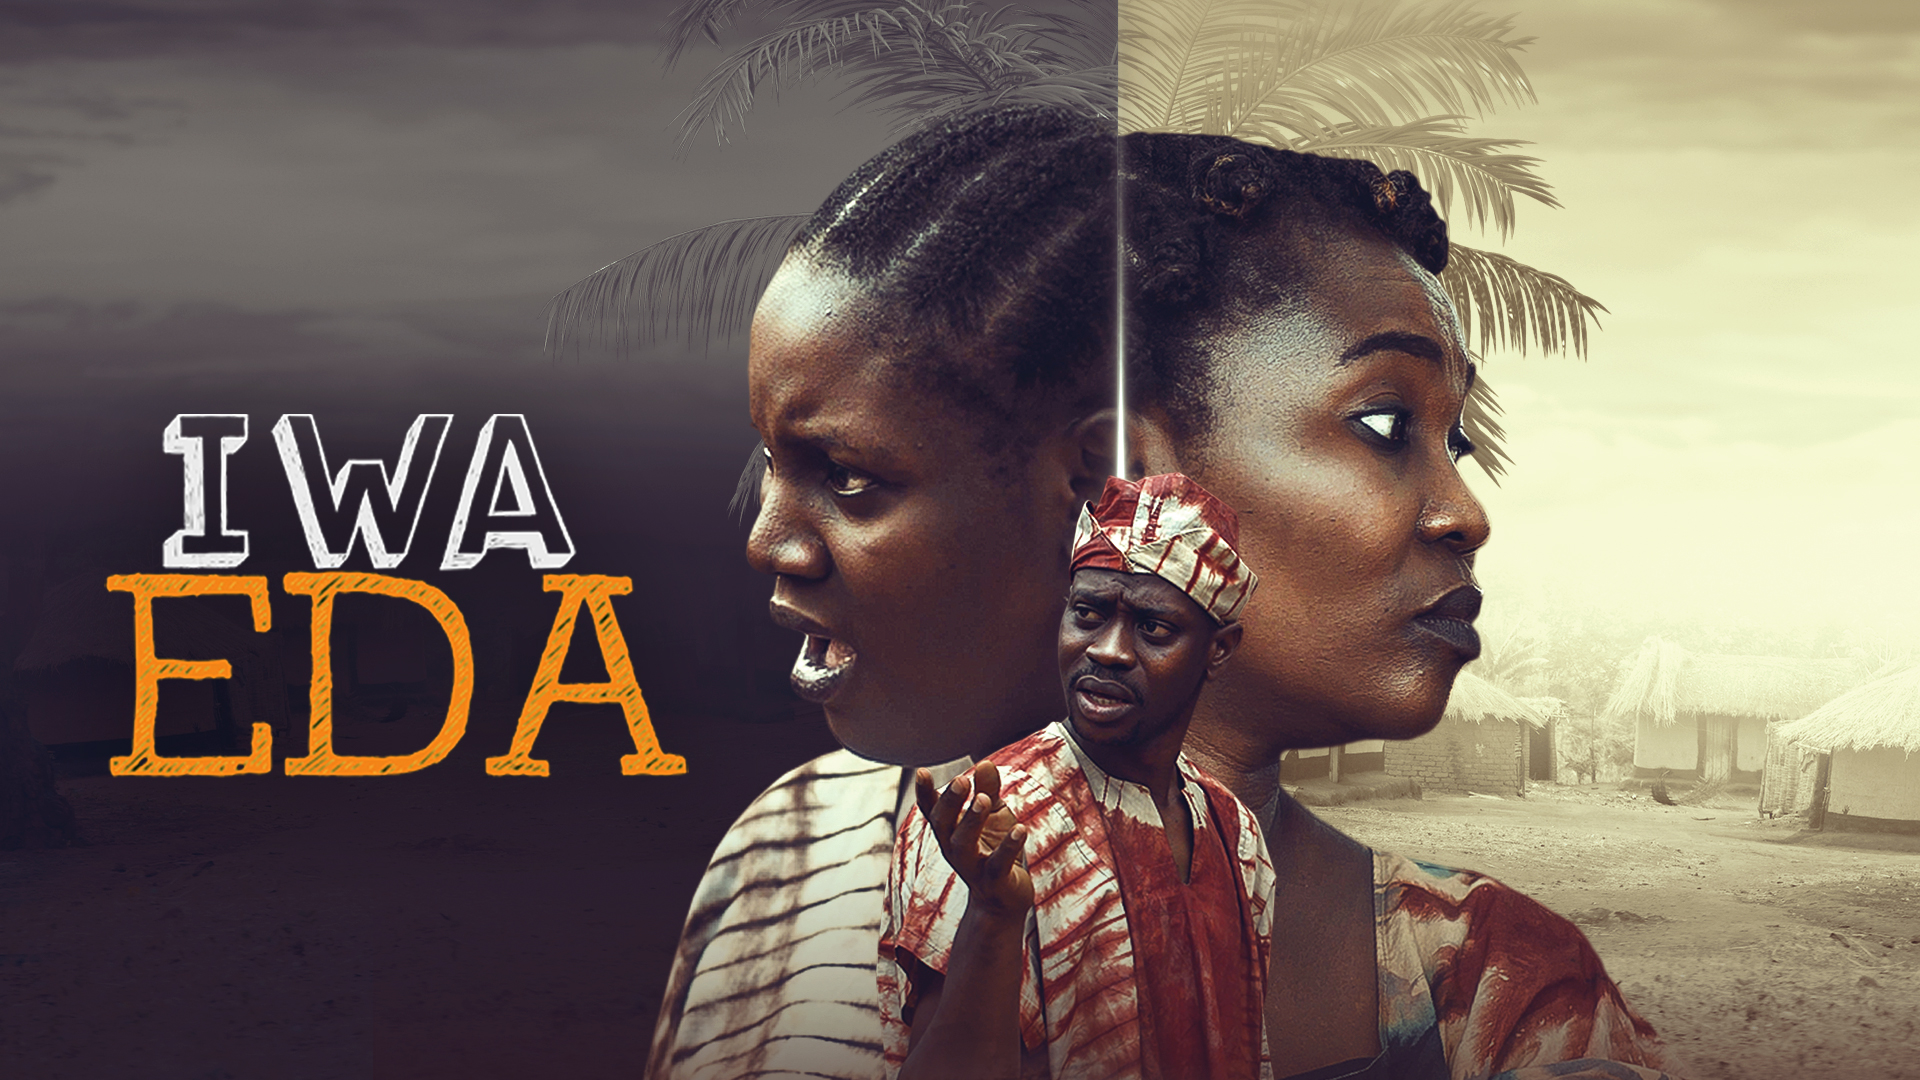 Download Iwa Eda – Nollywood Yoruba Movie